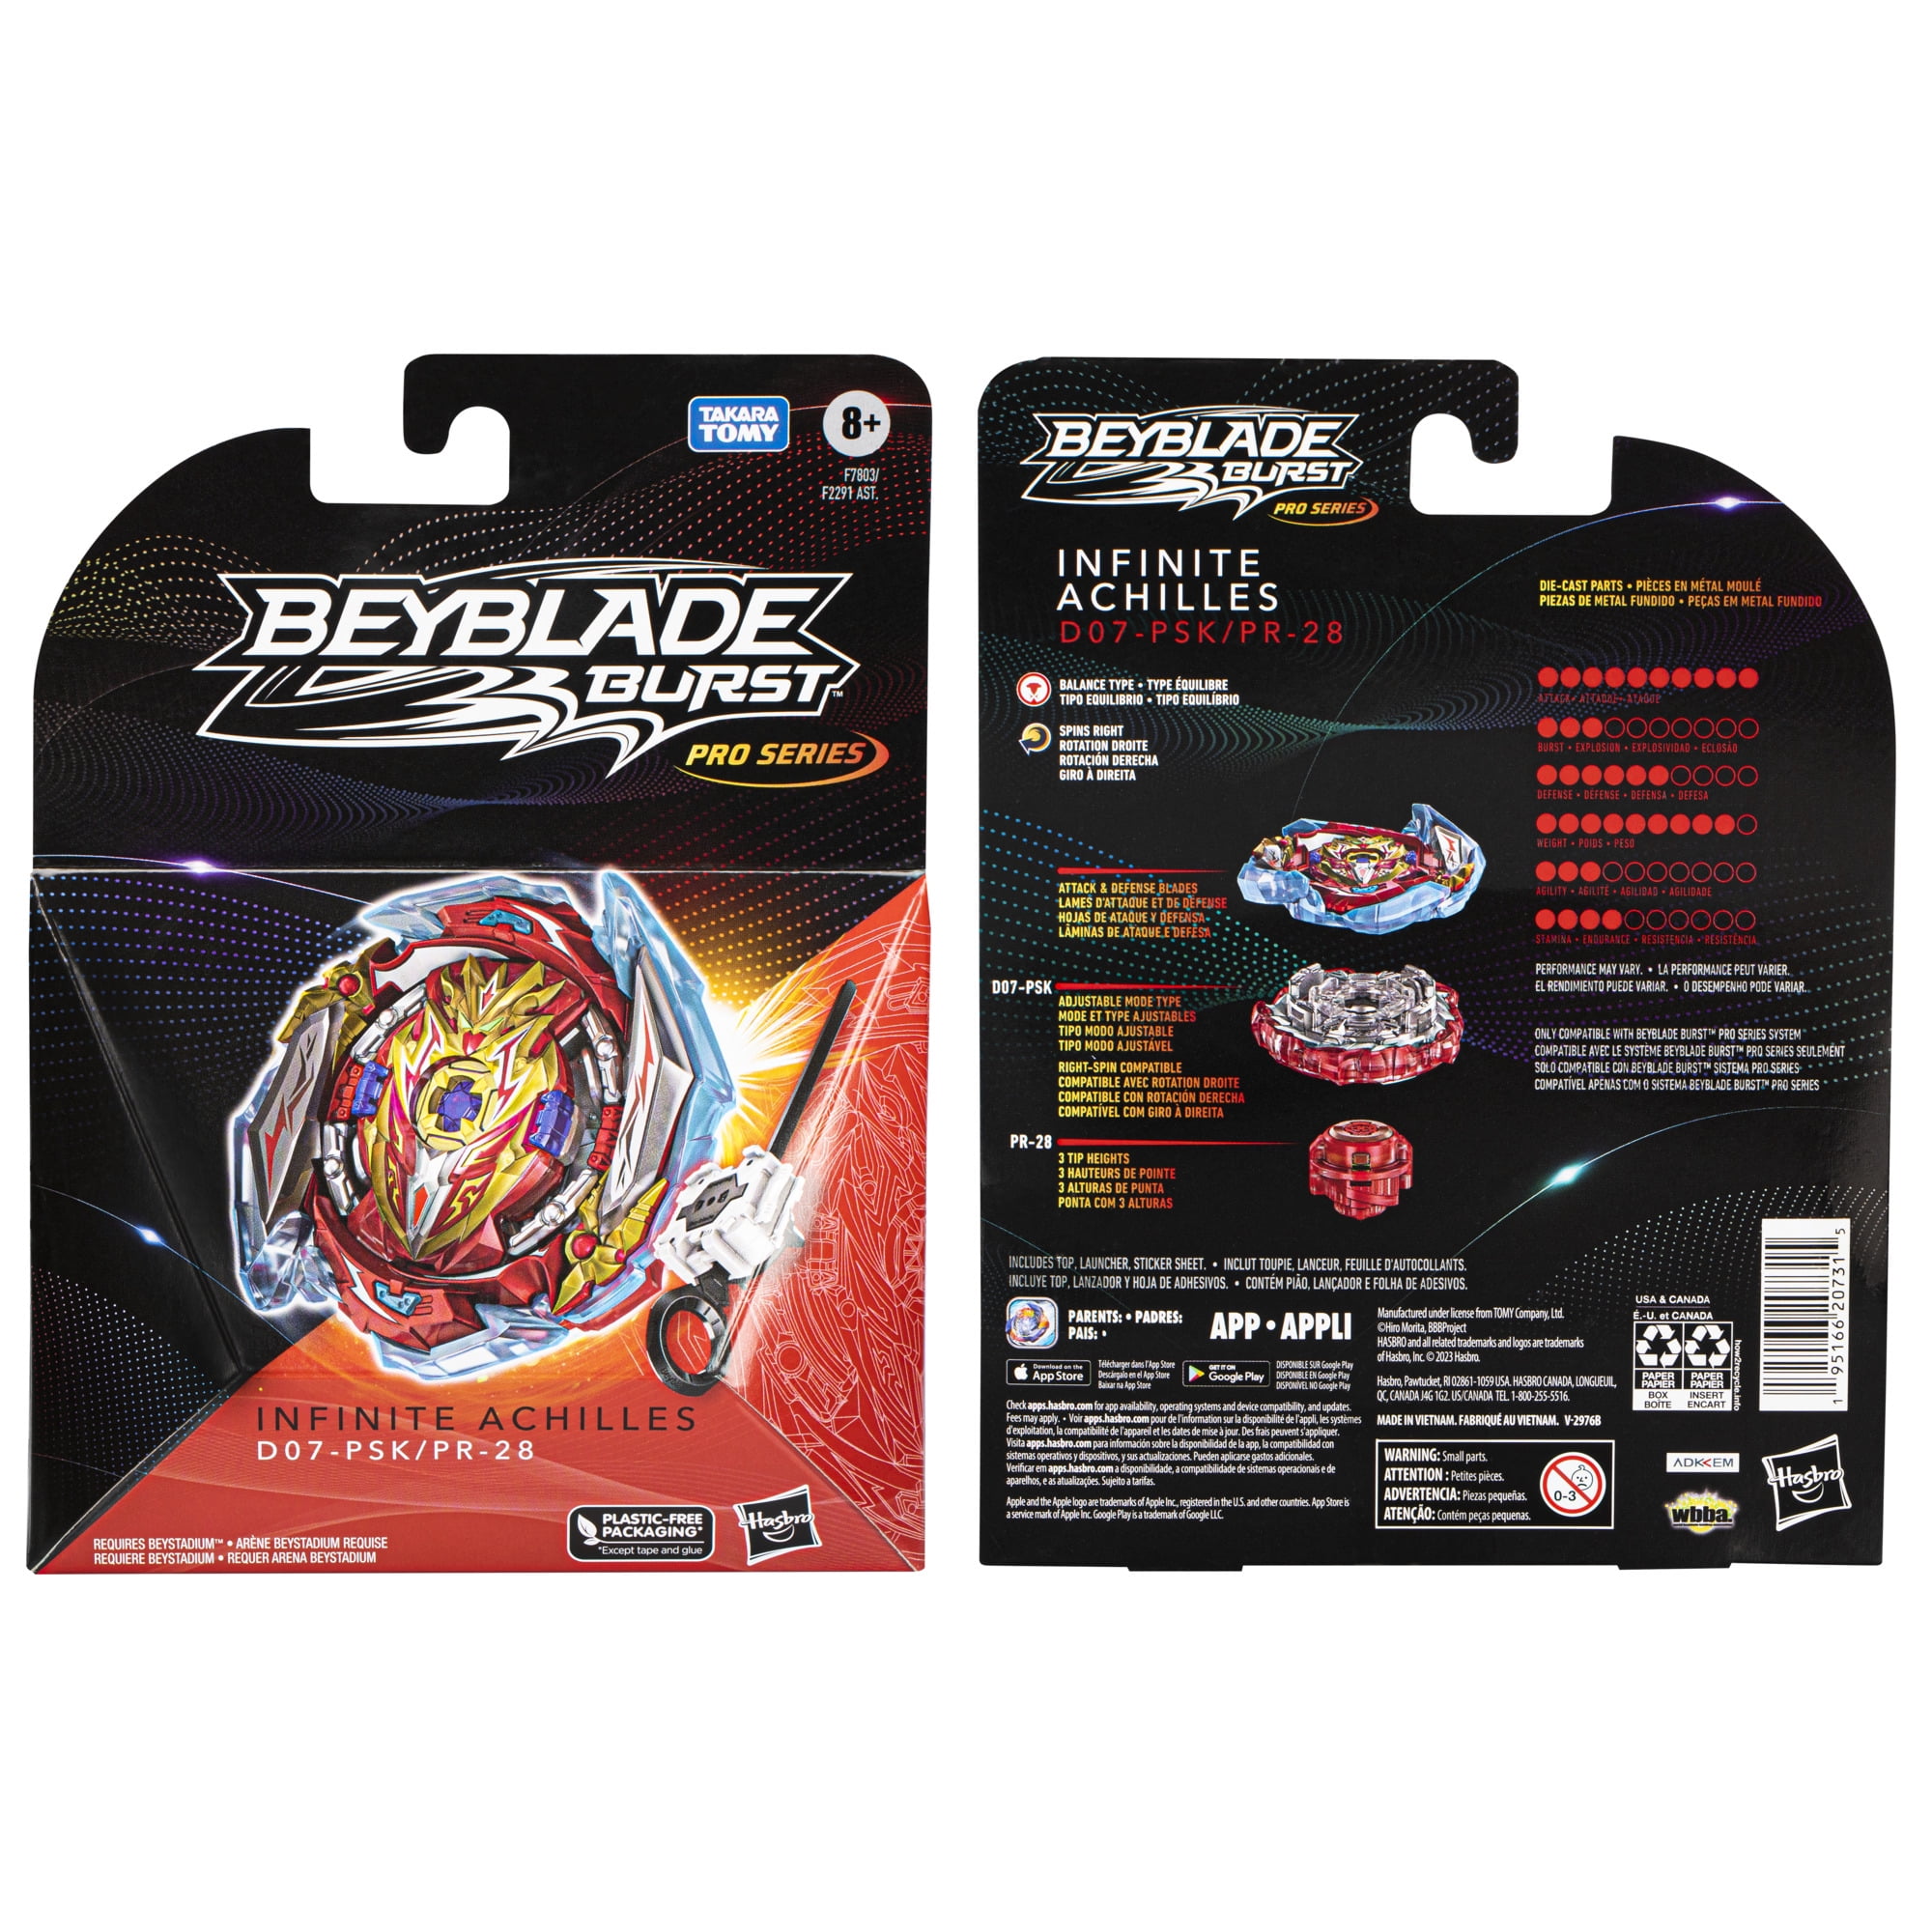 Beyblade Burst Pro Series Infinite Achilles Spinning Top Starter Pack